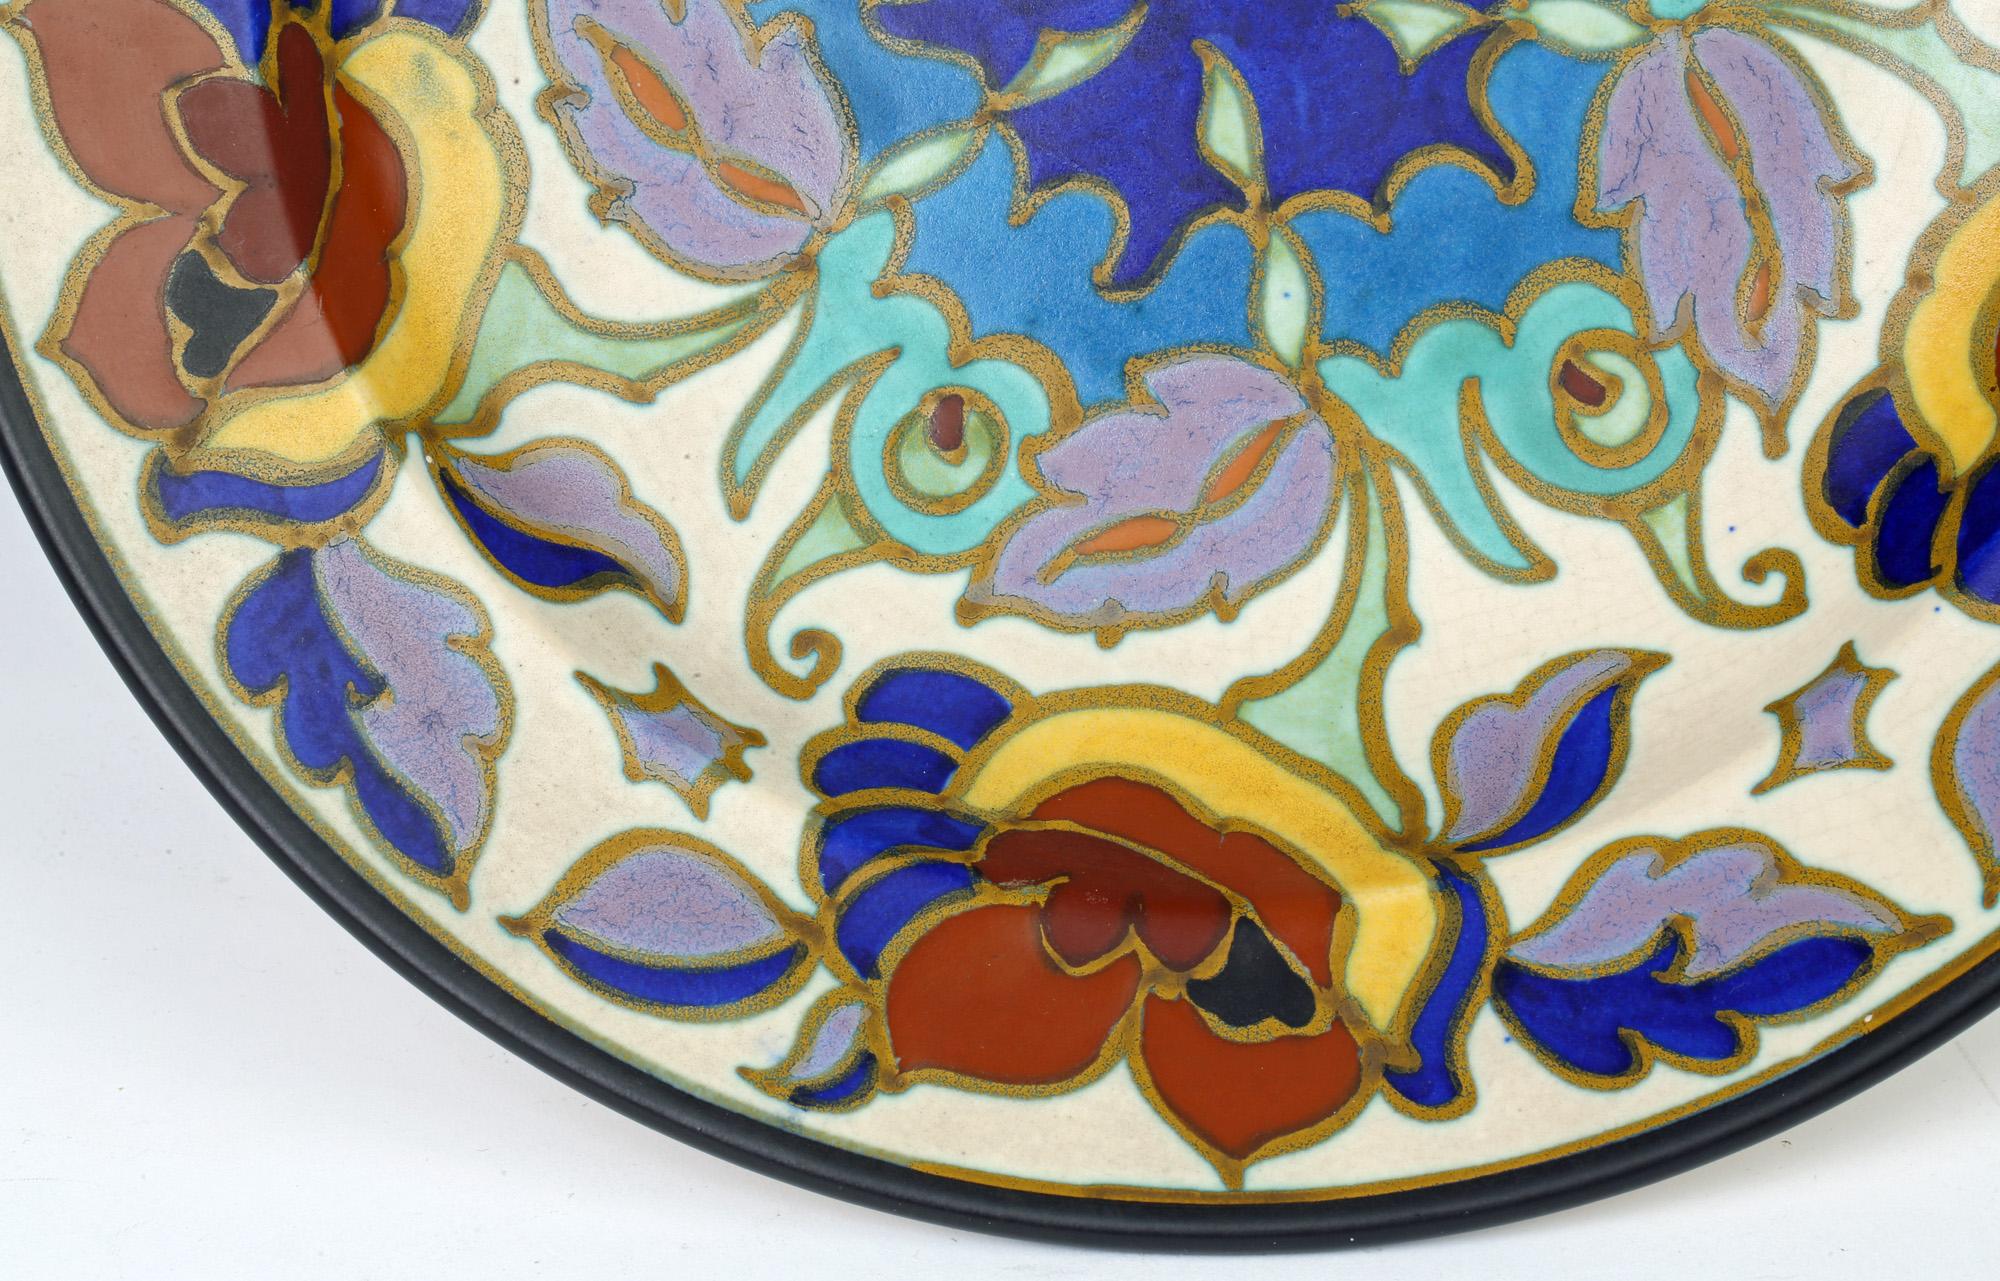 Gouda Plateelbakkerij Zuid, Holland, Wandplakette aus Keramik mit Gaberone-Muster (Art nouveau) im Angebot